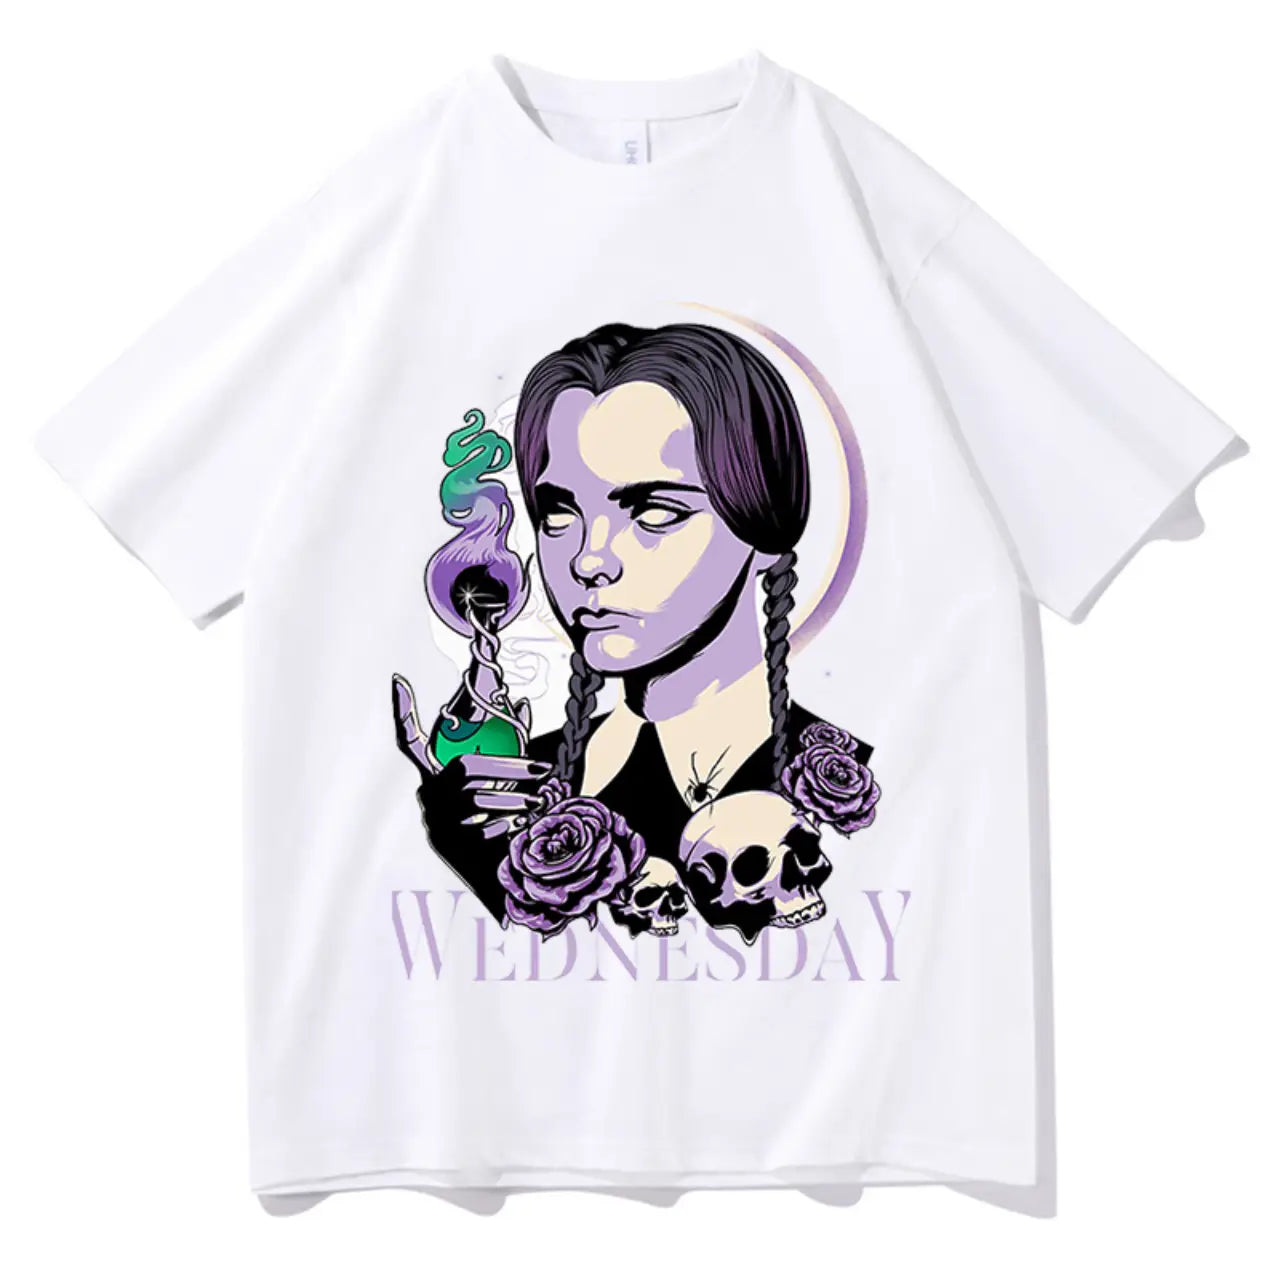 Streetwear Wednesday Addams Family T Shirt